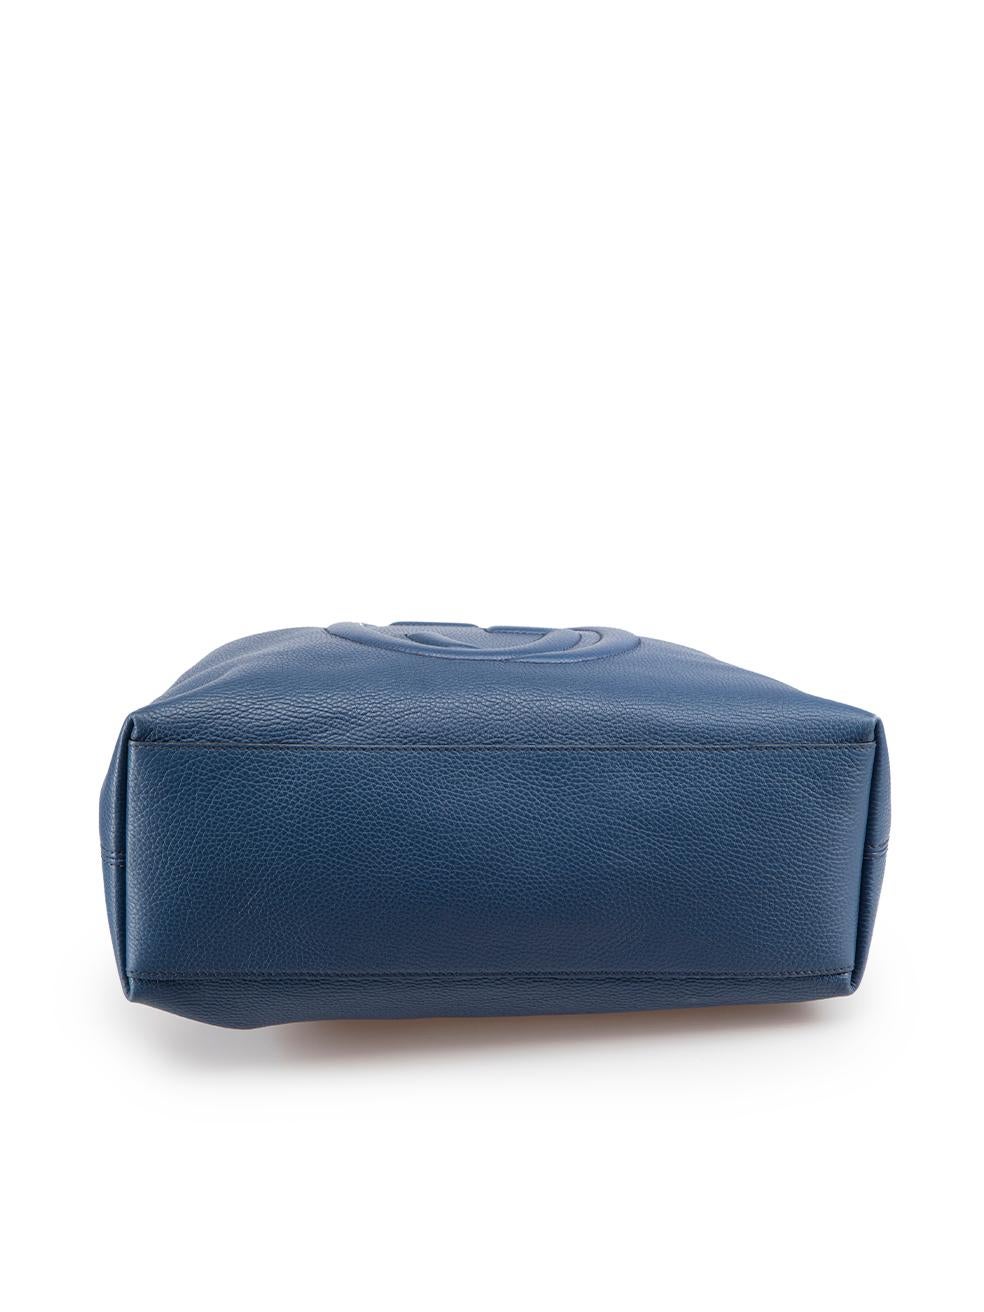 Women's Gucci Blue Leather Medium Soho Tote Bag